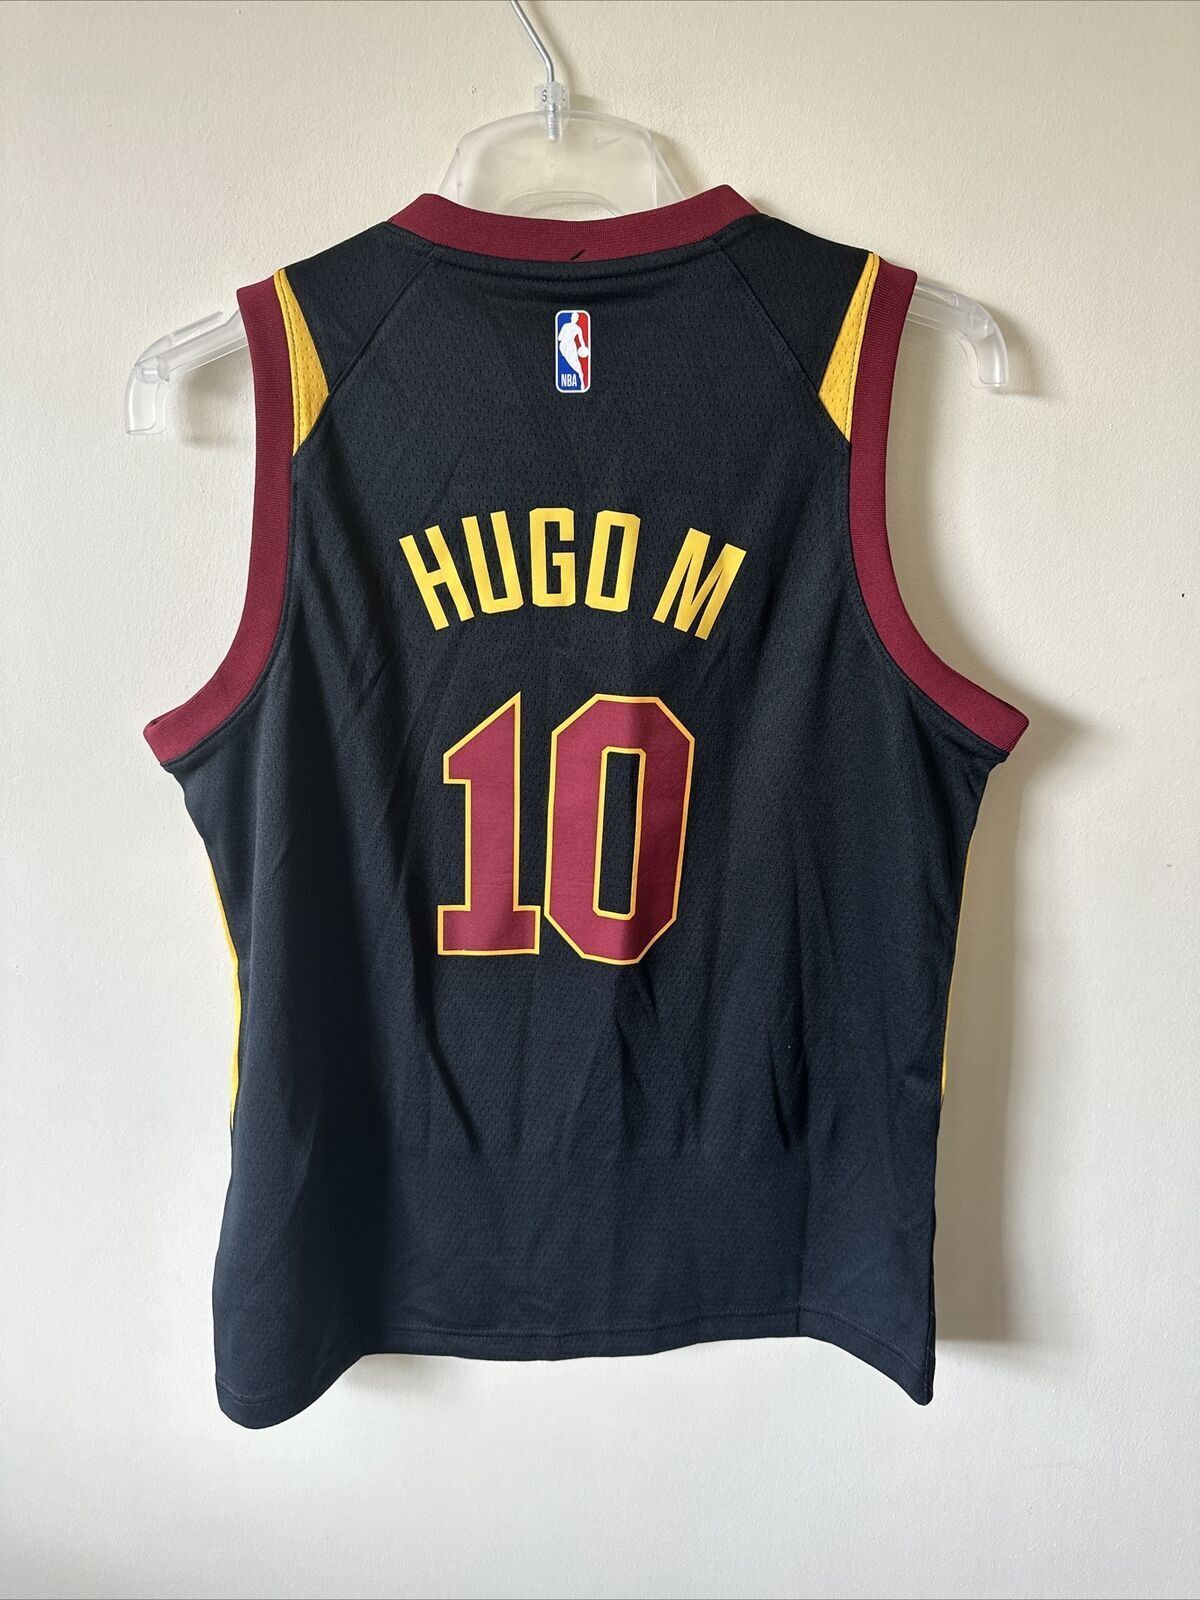 Nike NBA Cleveland Cavaliers Swingman Jersey HUGO M 10 Youth 12-13 Years